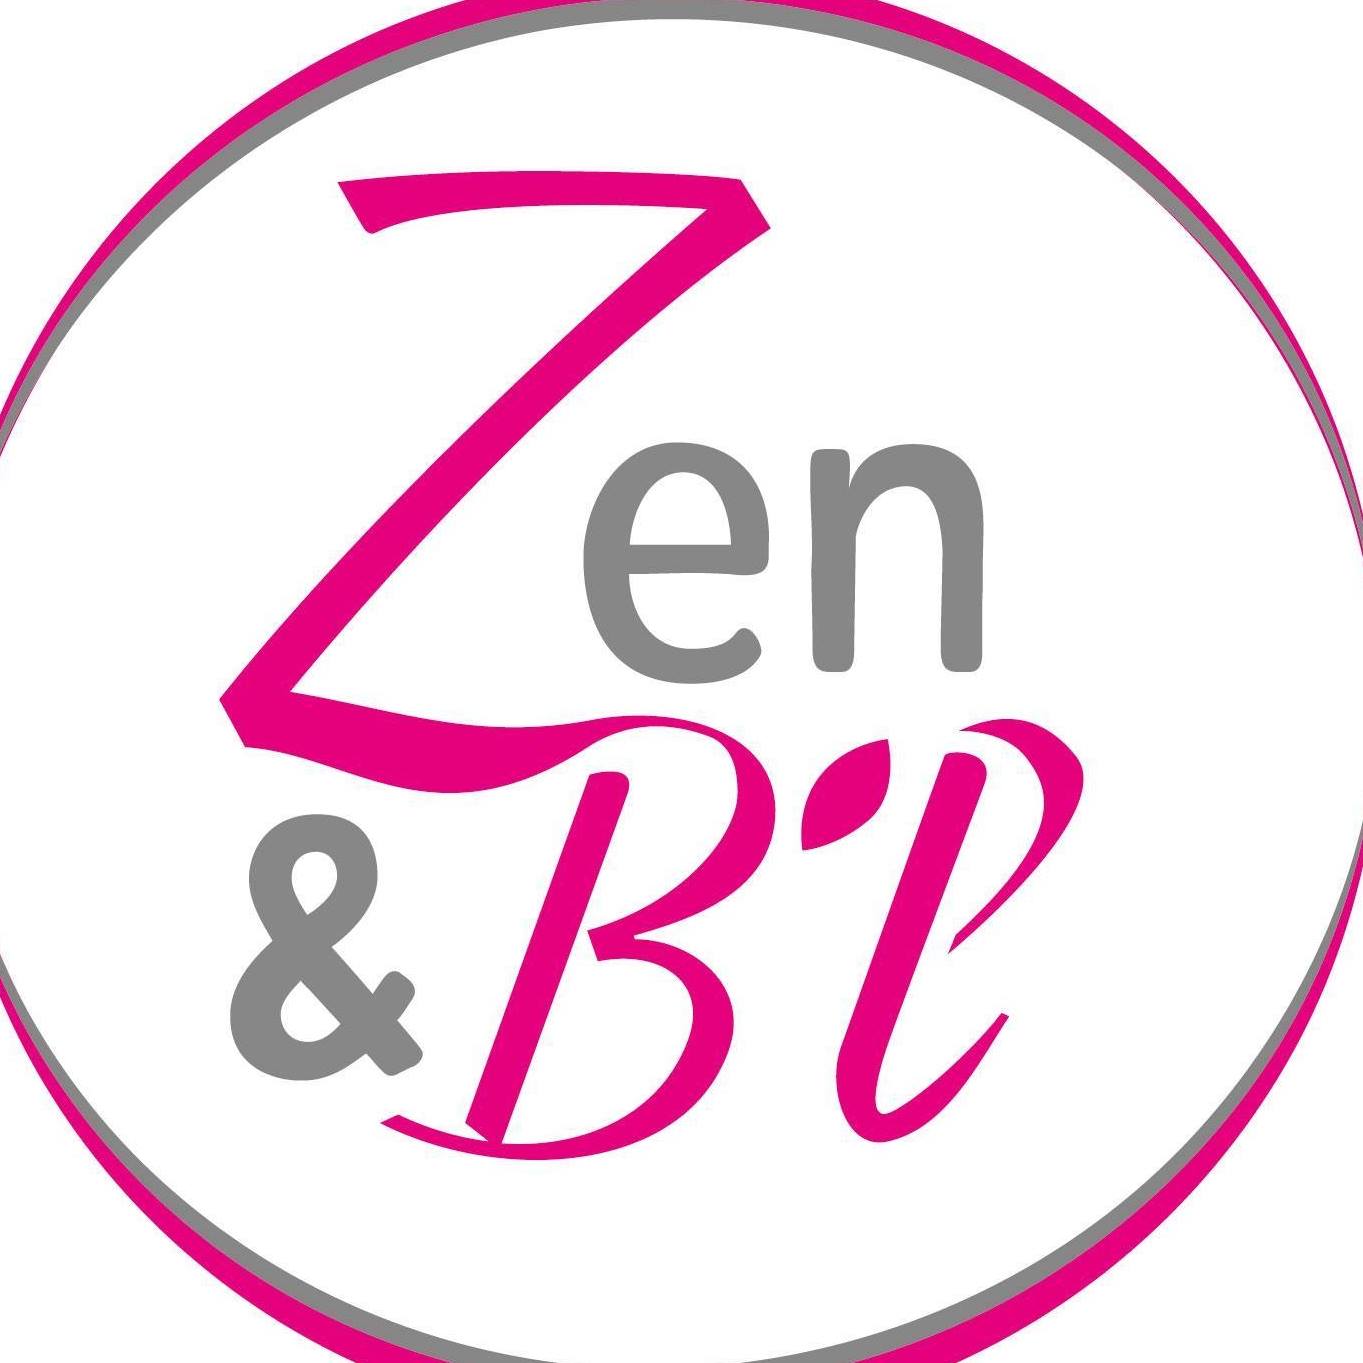 Logo de Zen & B'L